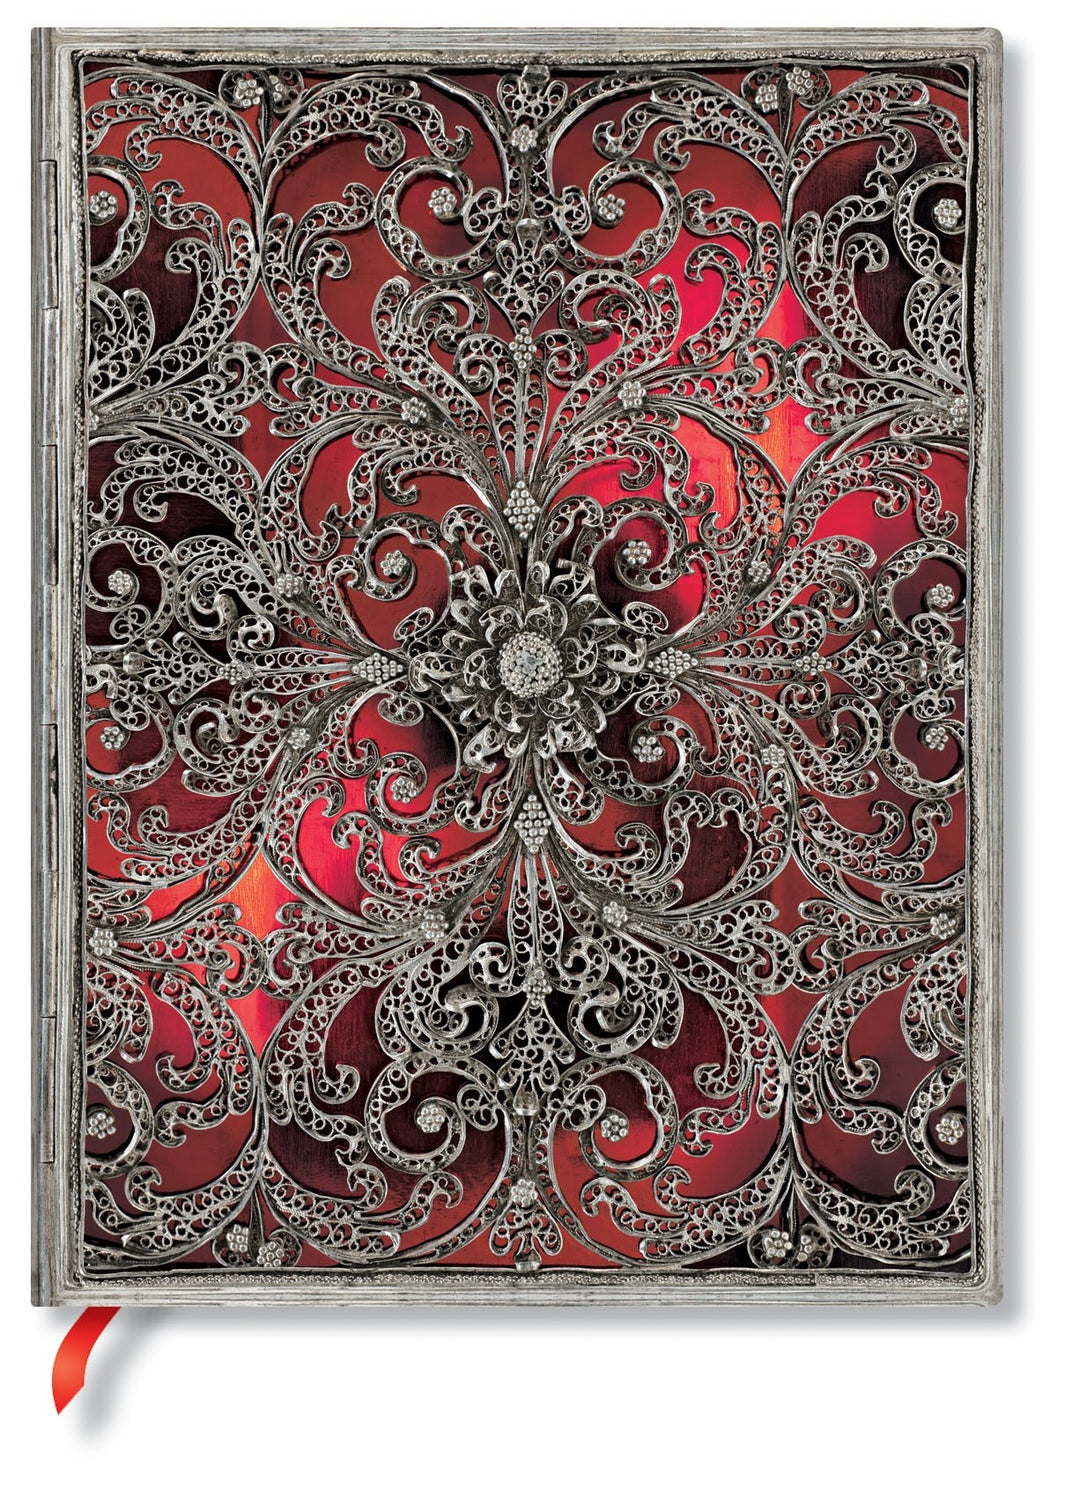 Flexi Journal - Silver Filigree Collection, Garnet, Ultra Lined